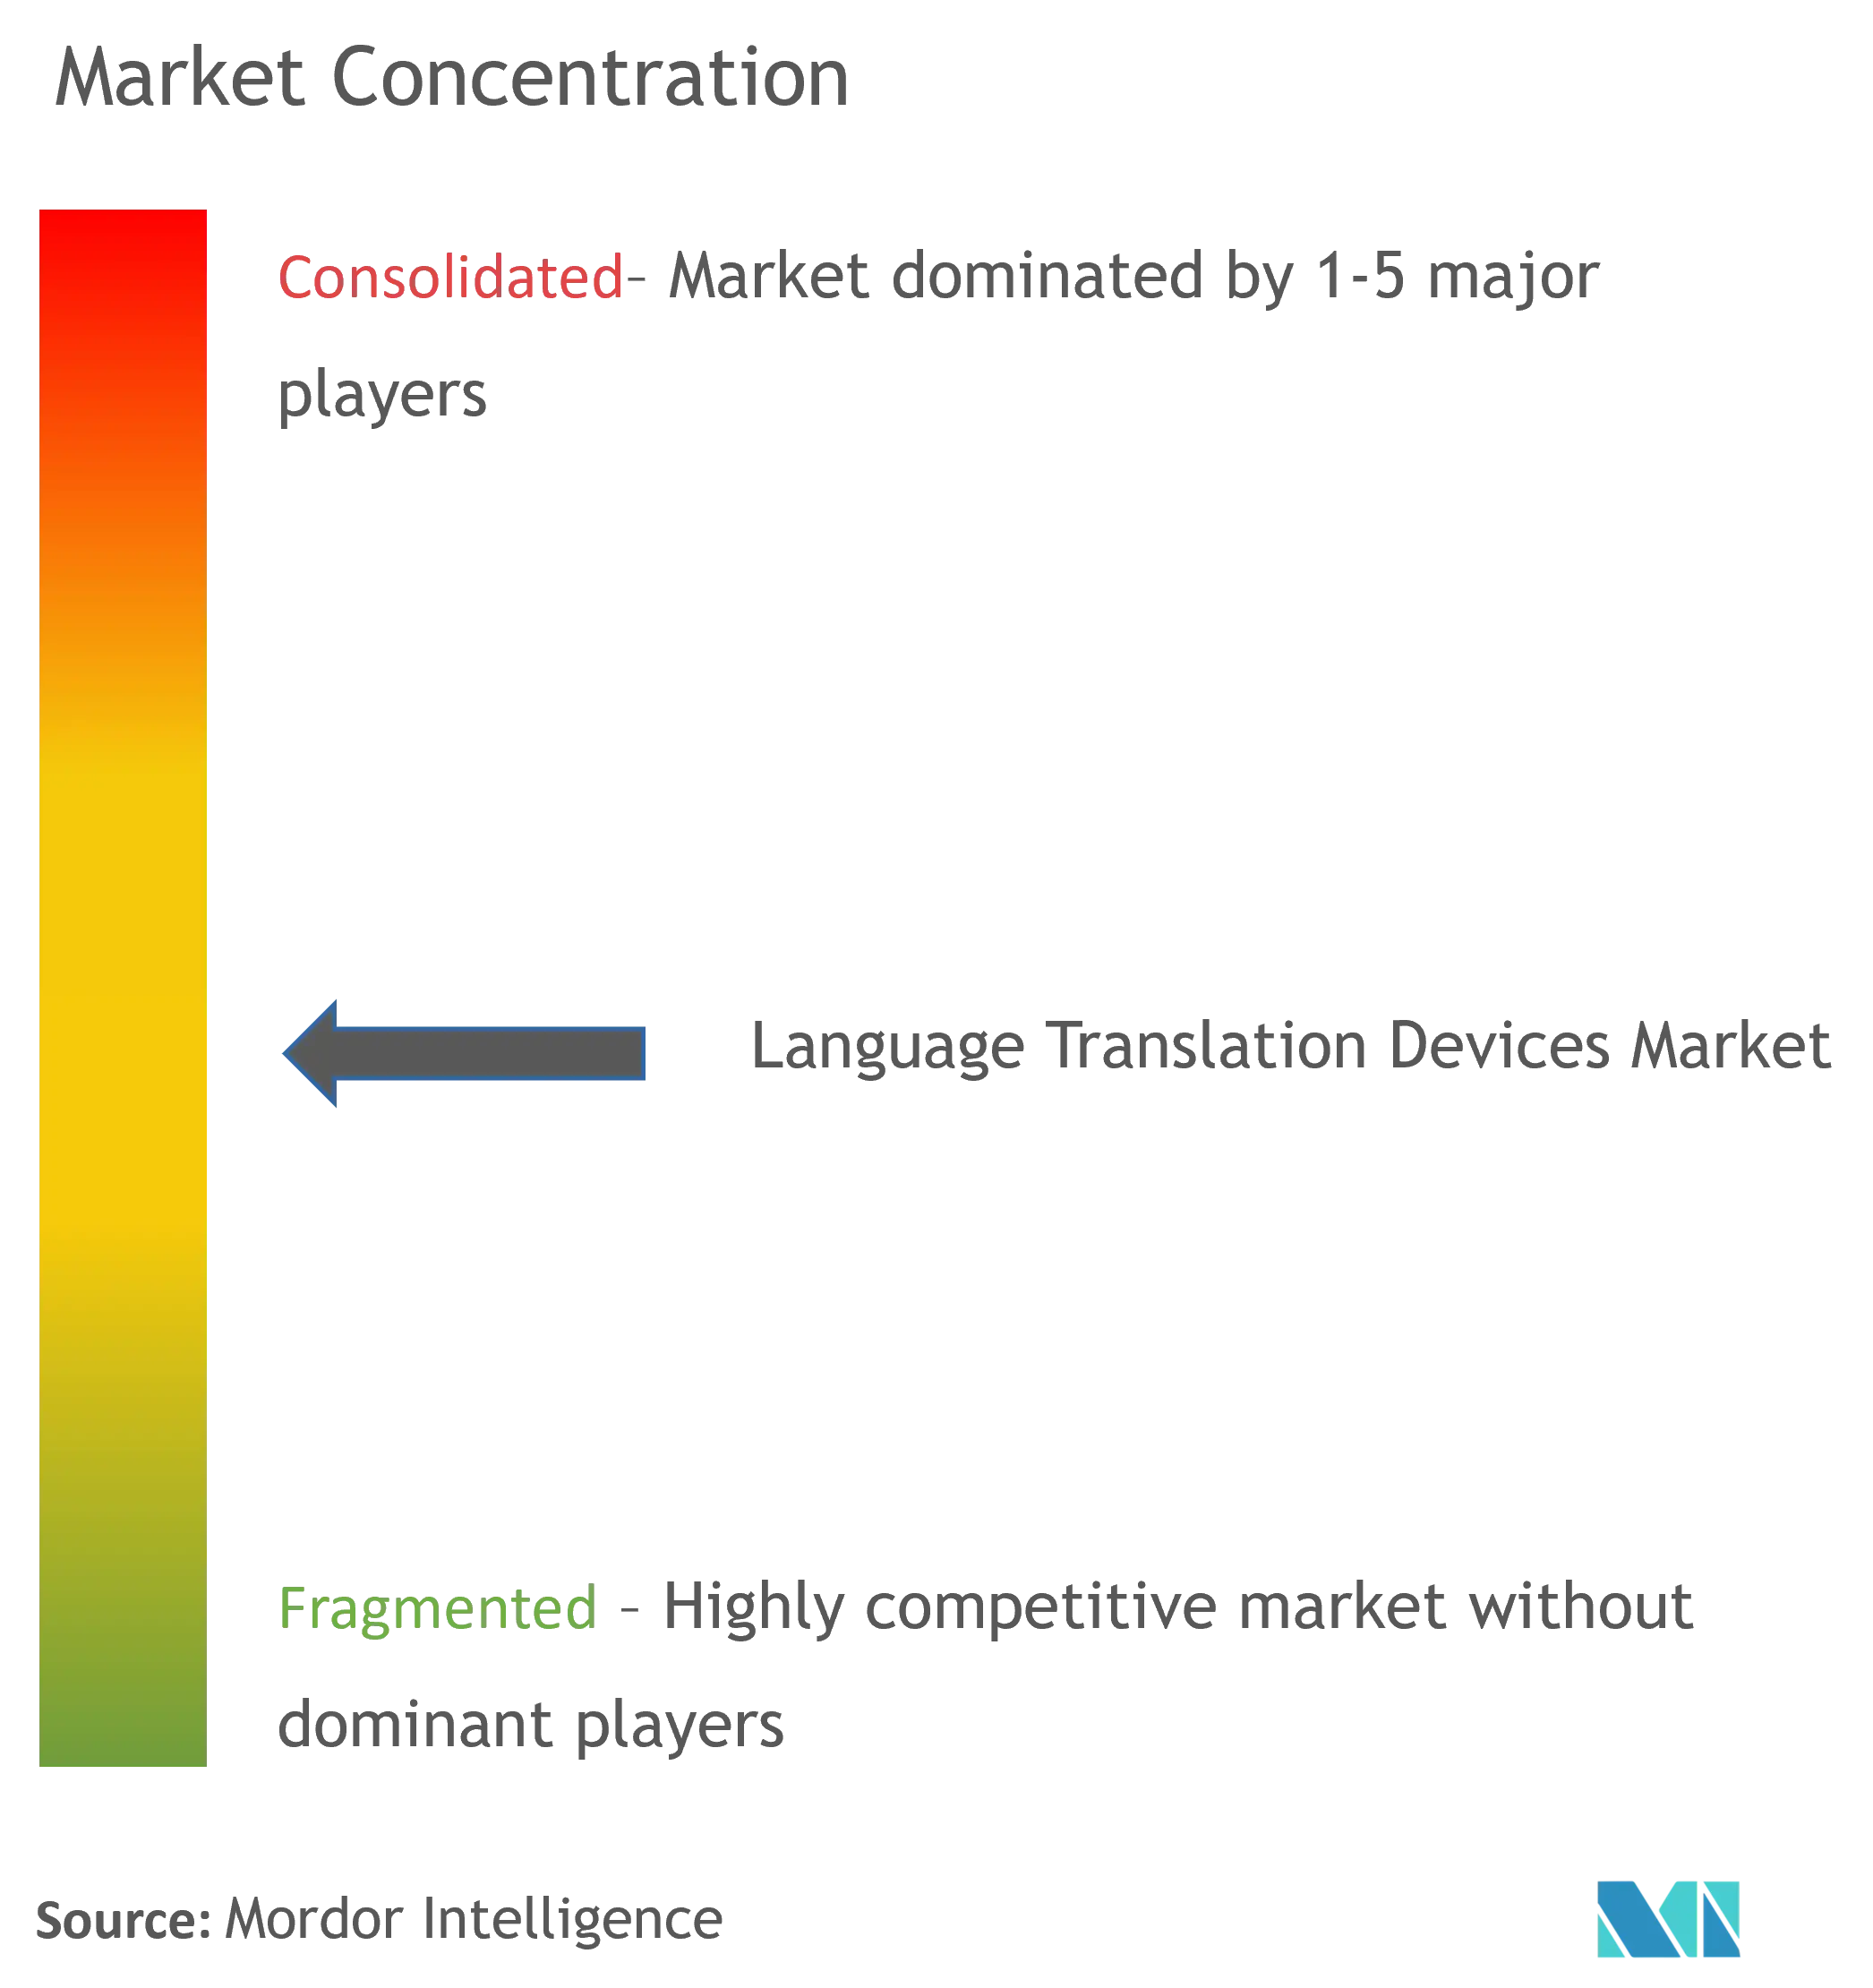 Language Translation Device Market Concentration